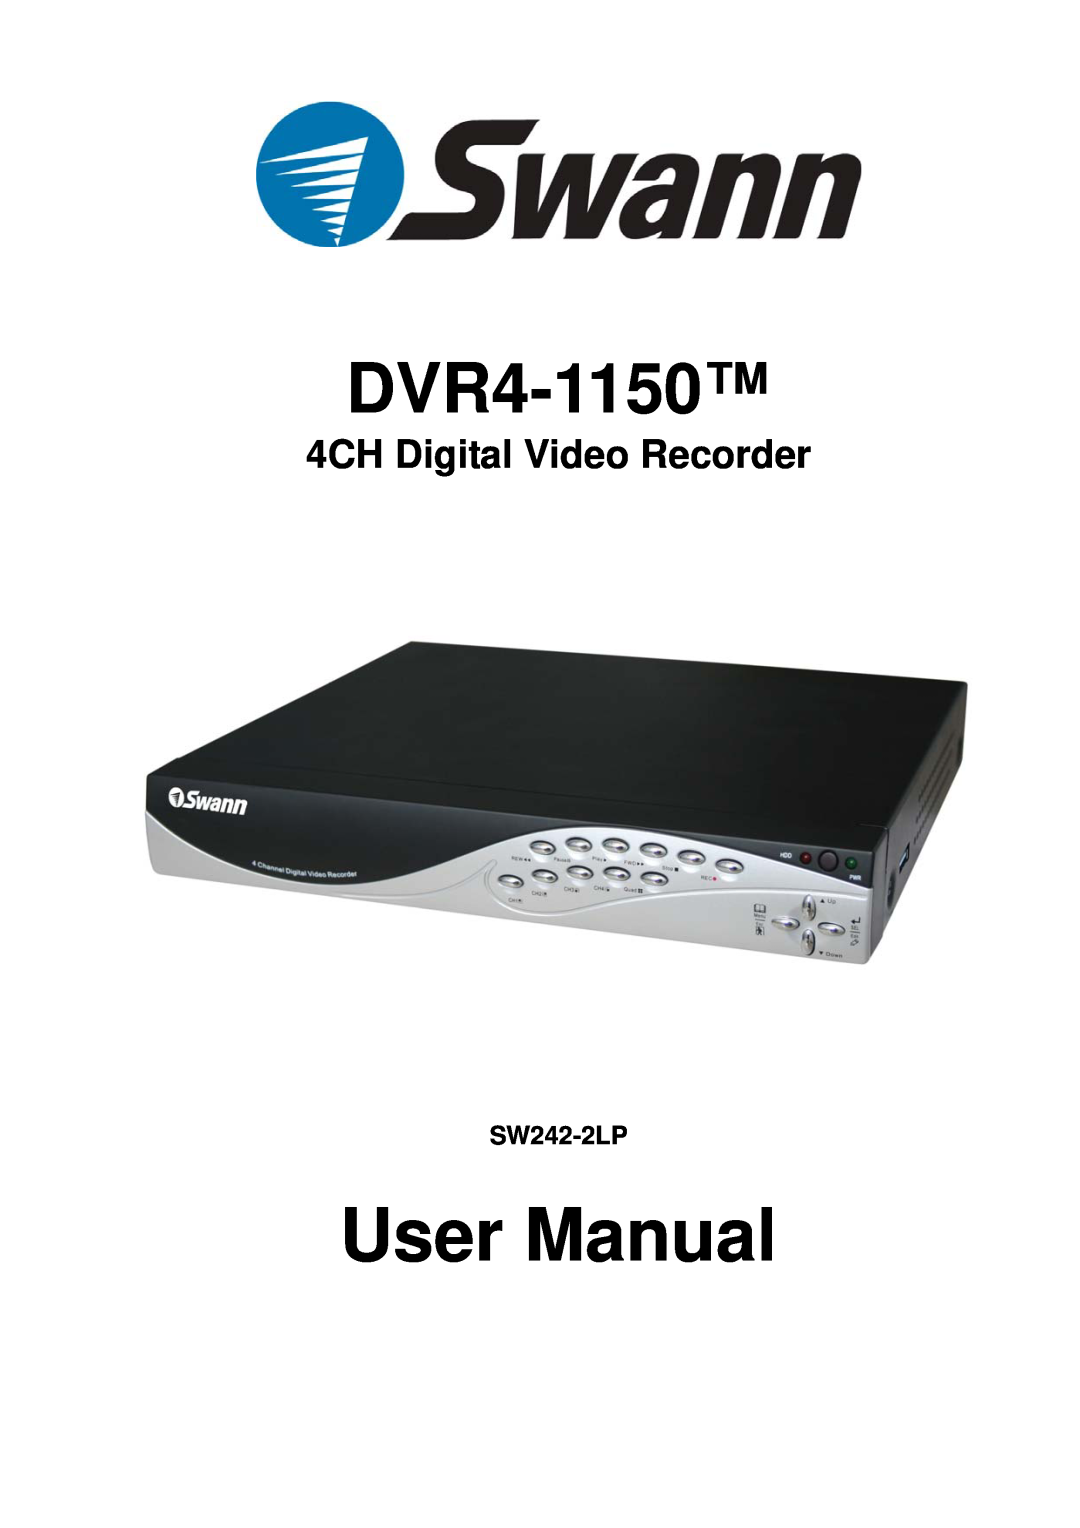 Swann SW242-2LP user manual User Manual, DVR4-1150, 4CH Digital Video Recorder 